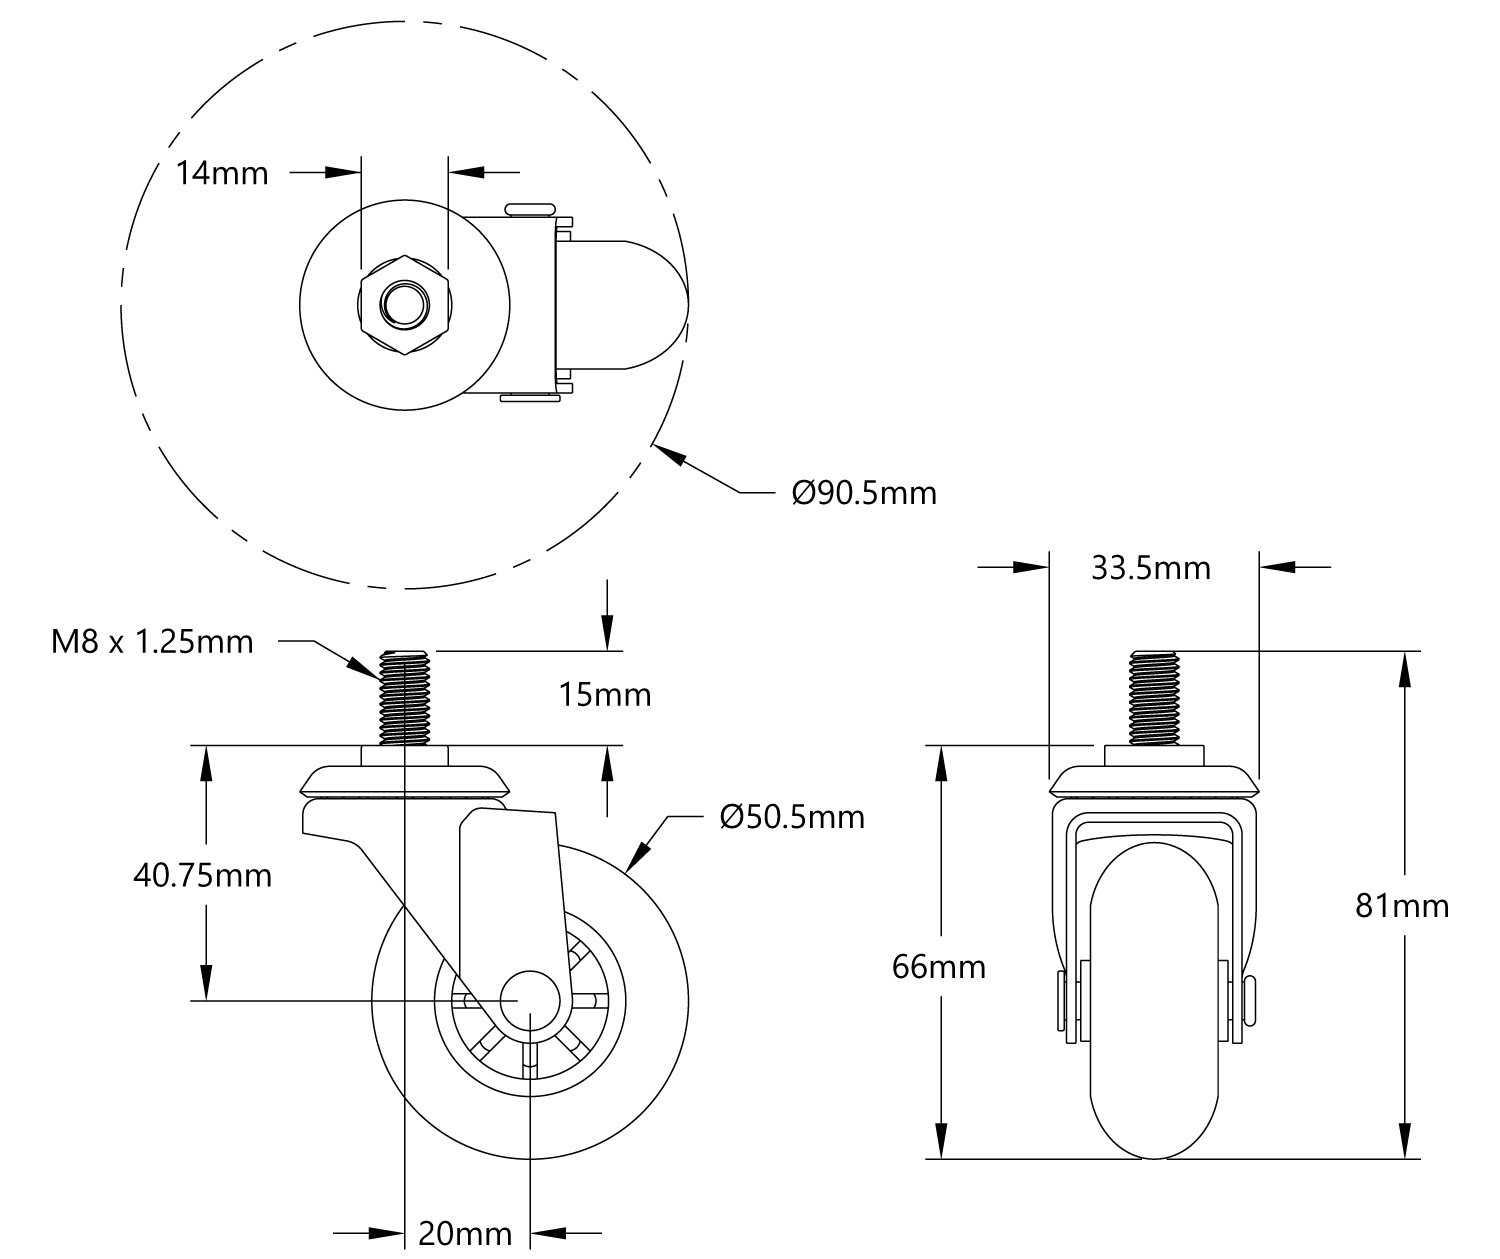 GoBilda Swivel Caster Wheel (M8 x 1.25mm Male Stud) - Click to Enlarge